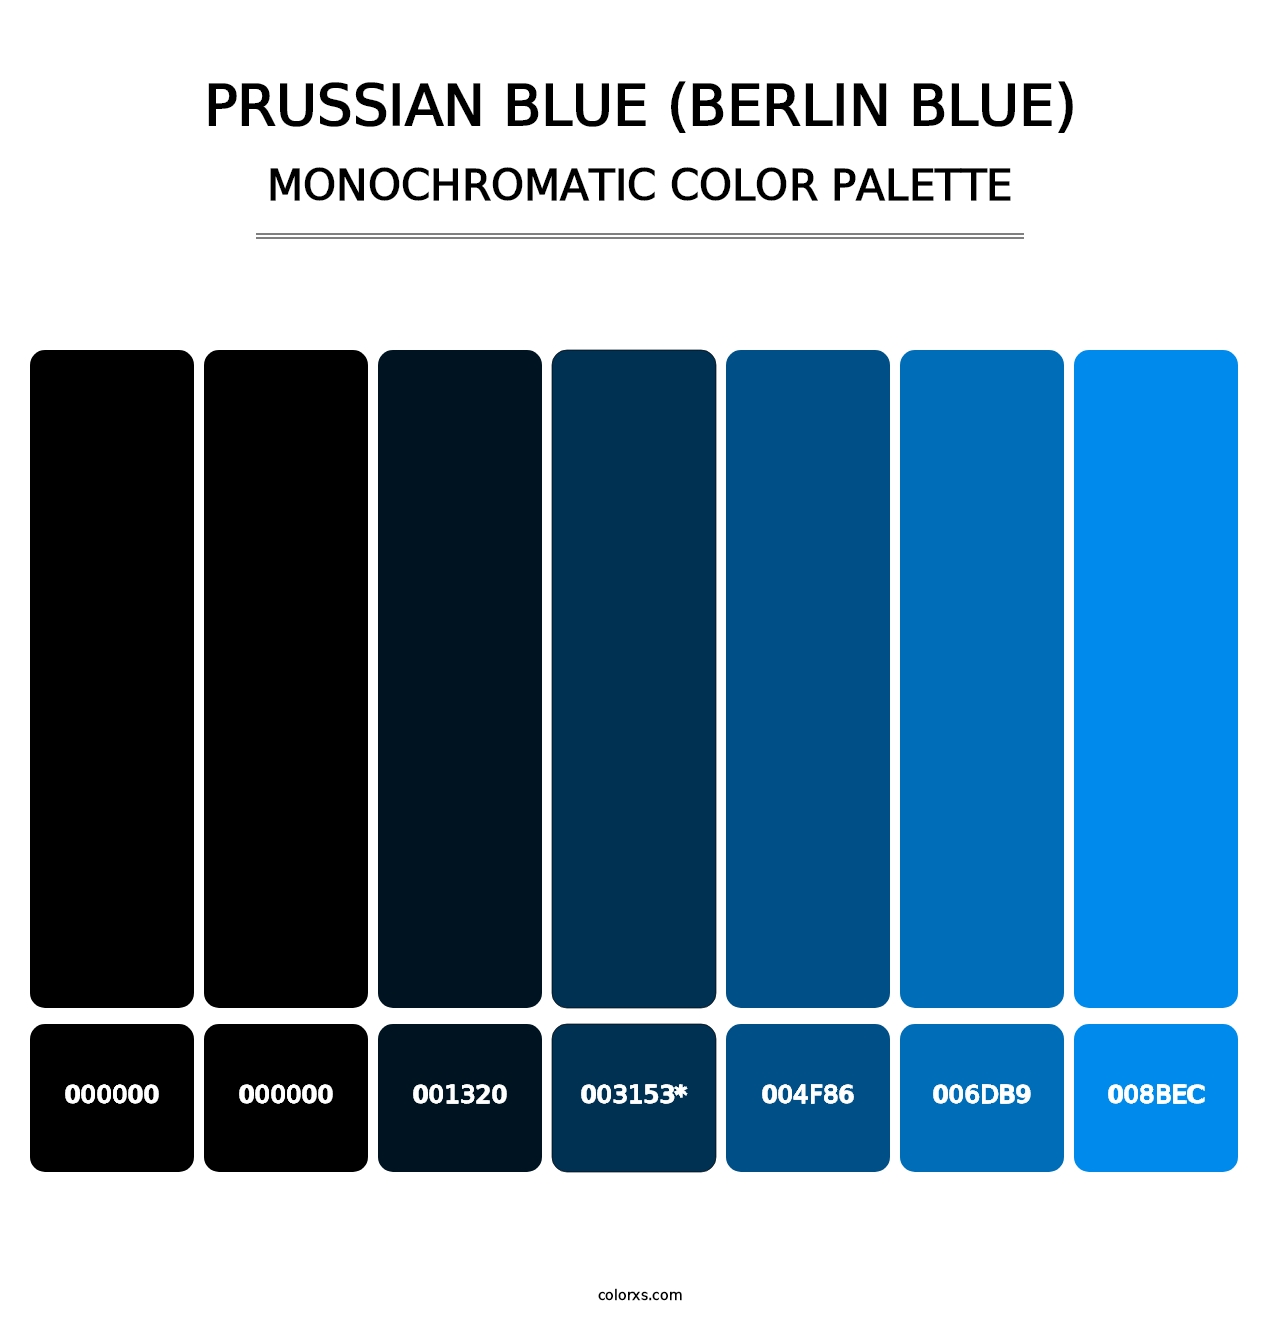 Prussian Blue (Berlin Blue) - Monochromatic Color Palette